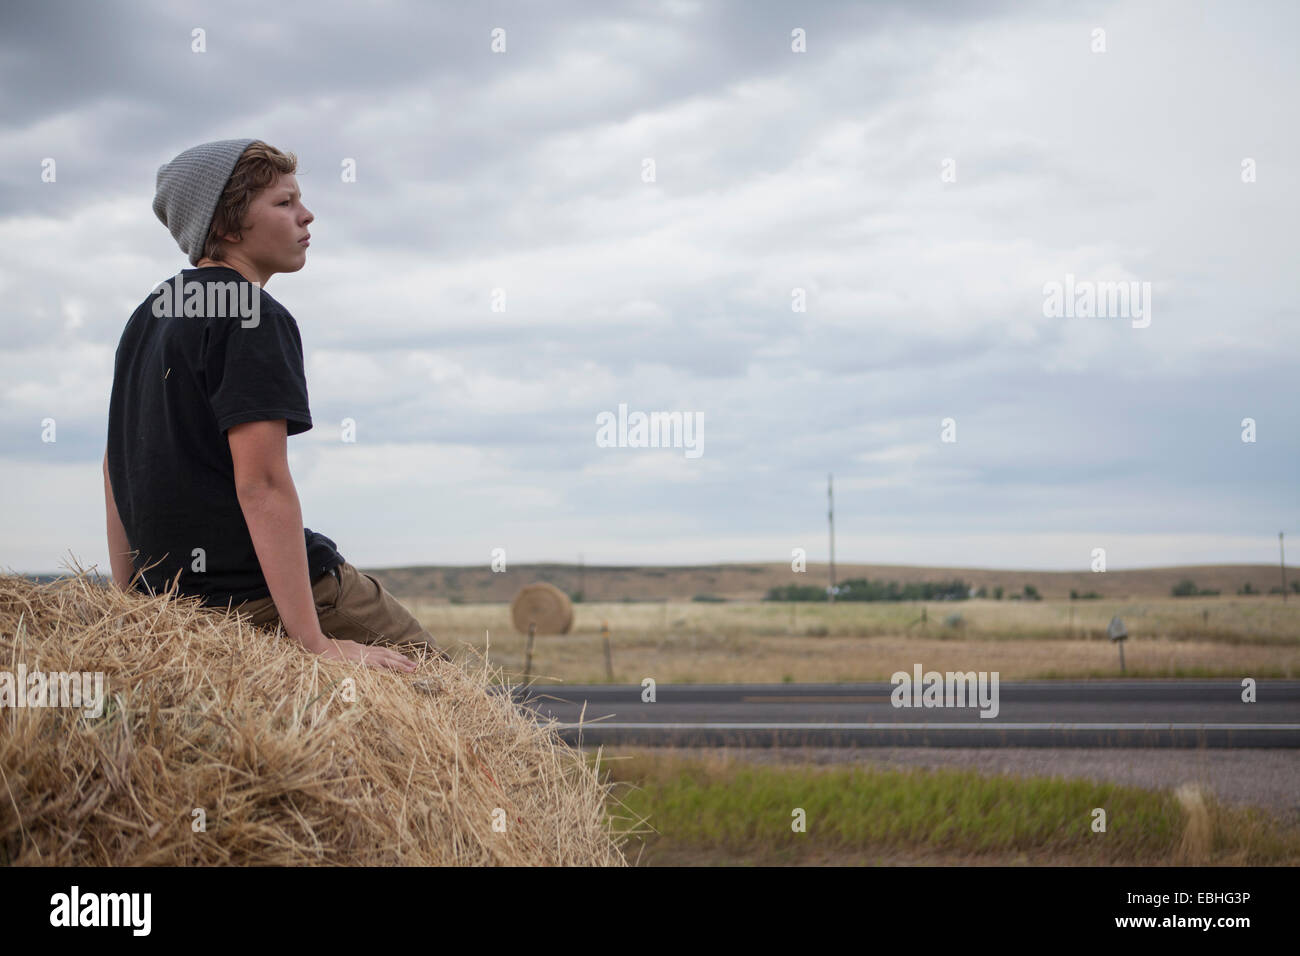 Teenage boy sitting on haystack, South Dakota, USA Banque D'Images